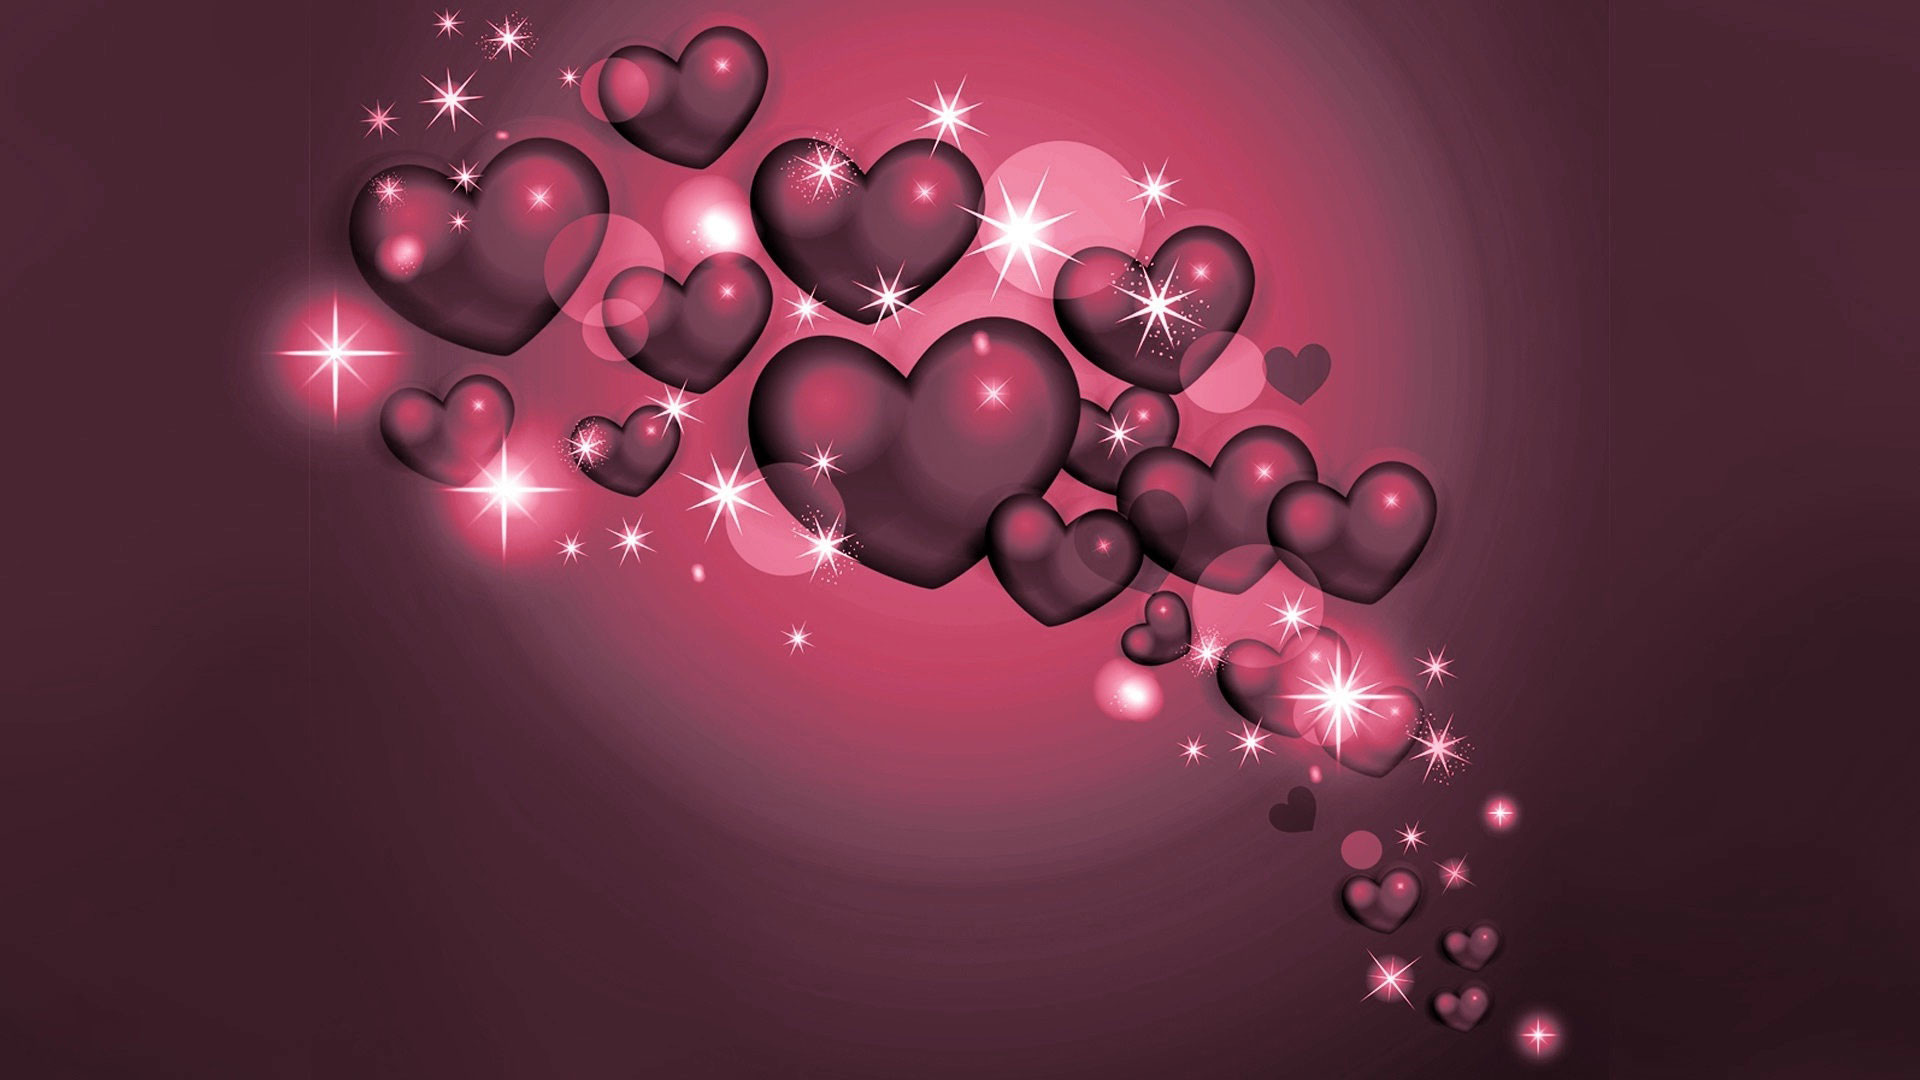 Hd Pics Photos Love Special Glittering Cute Love Hearts Desktop Background Wallpaper 1920x1080